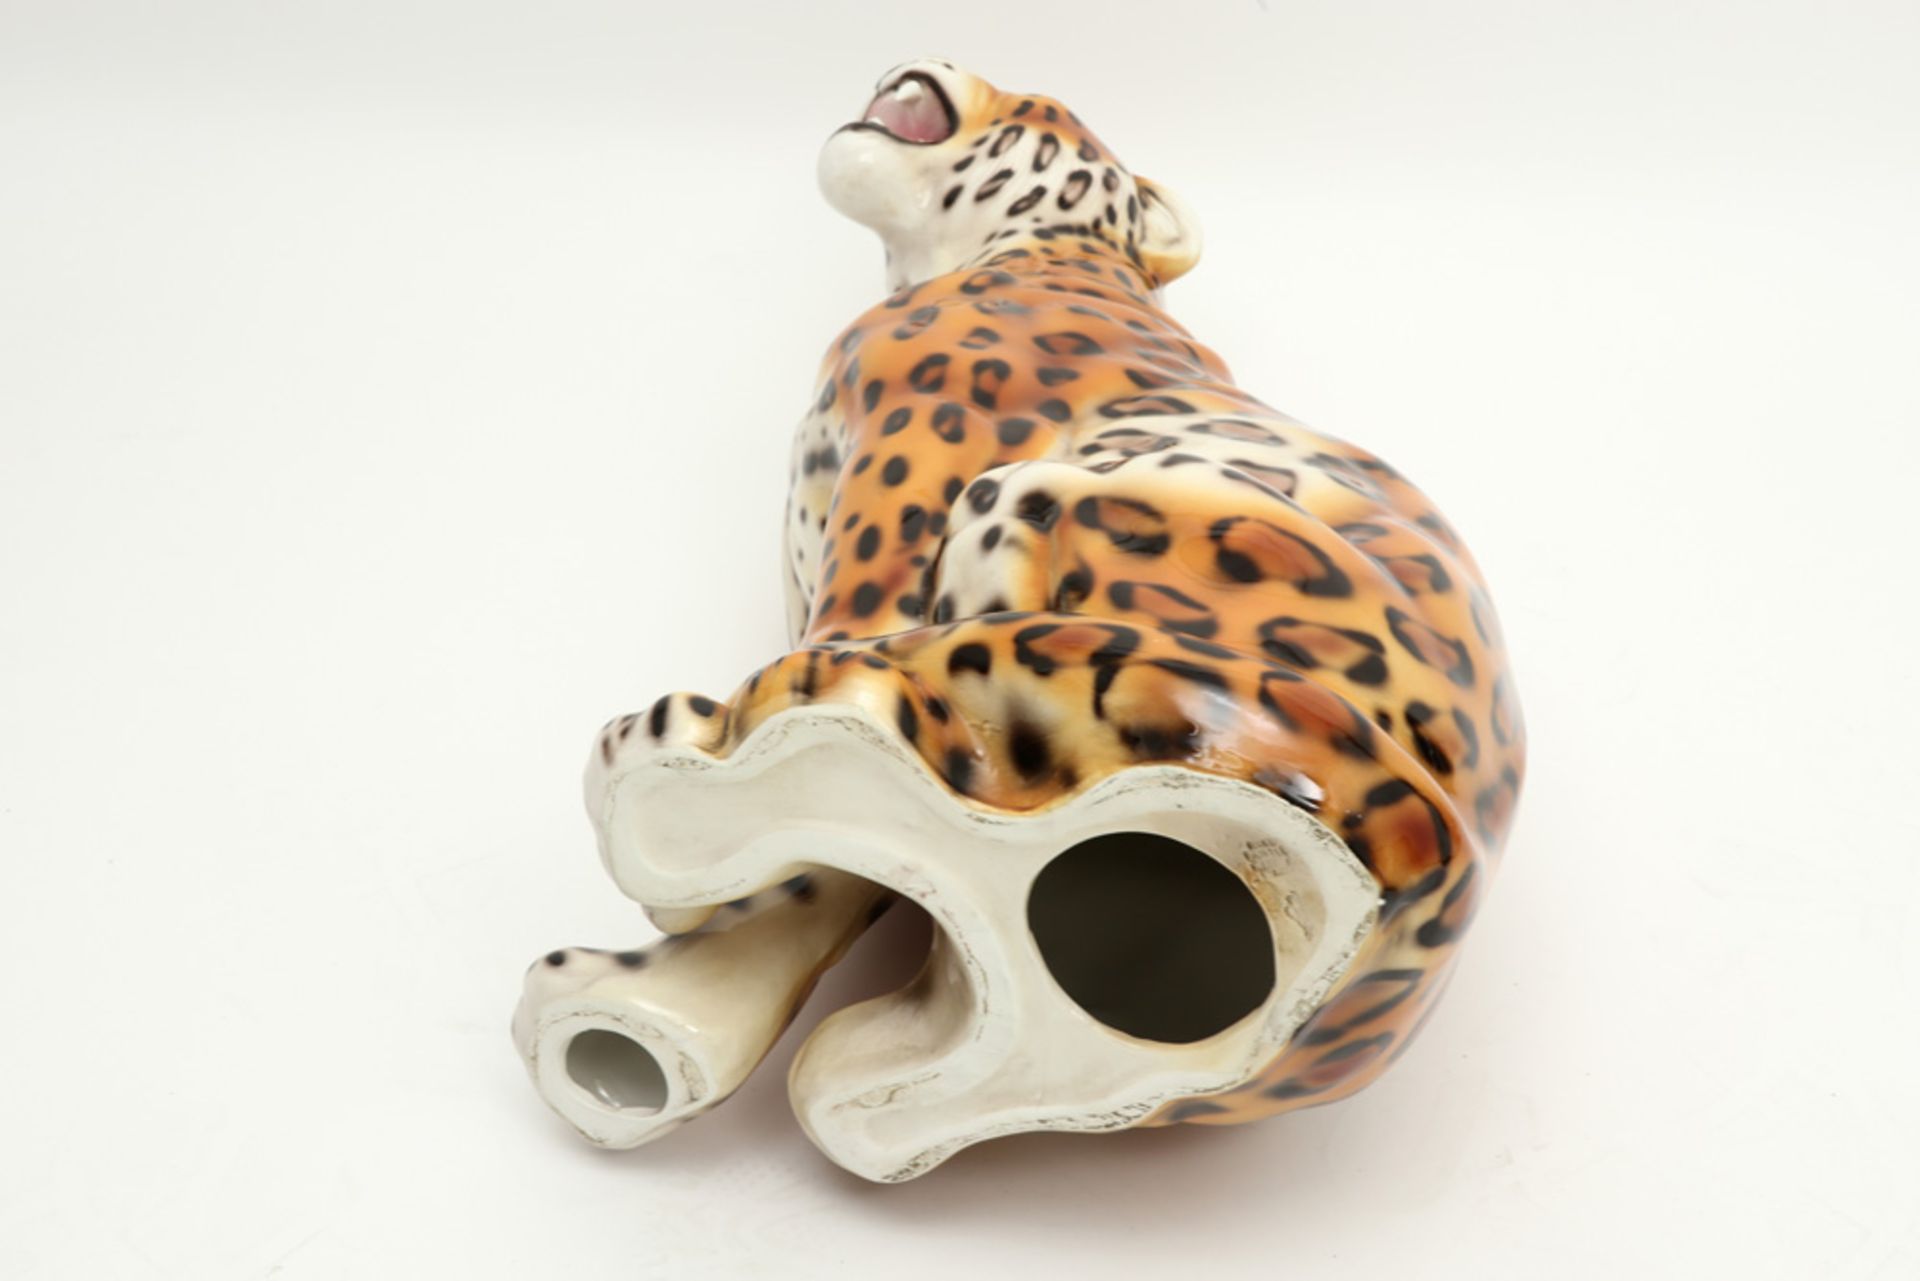 fifties'/sxties' Italian "Sitting leopard" sculpture in ceramic - Image 4 of 5